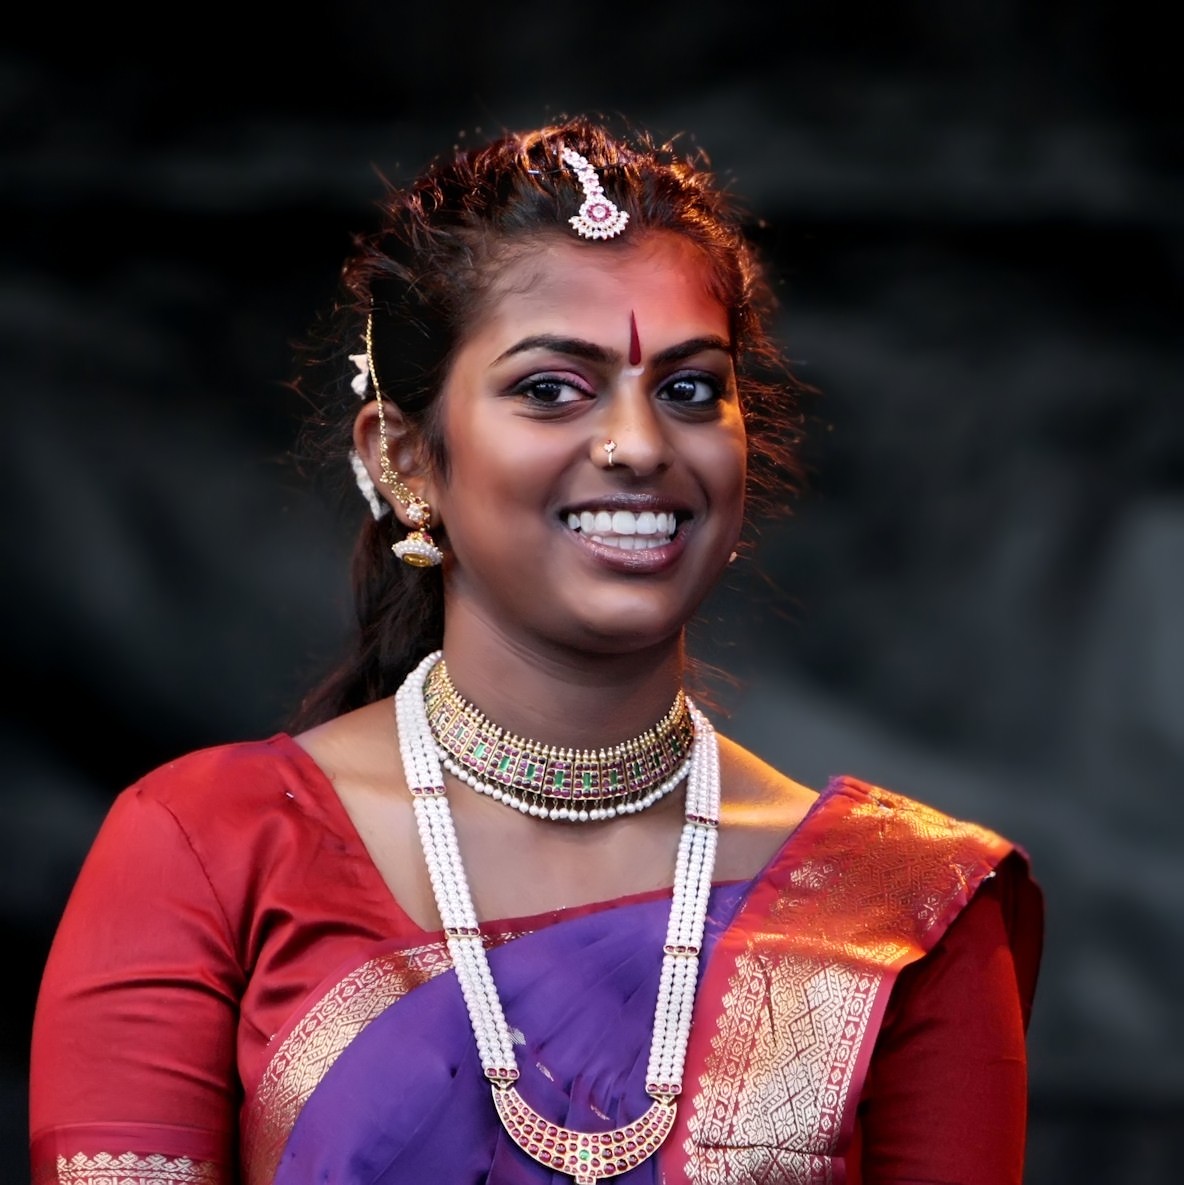 Young indian temple dancer from Tamil Mantram e.V., Frankfurt